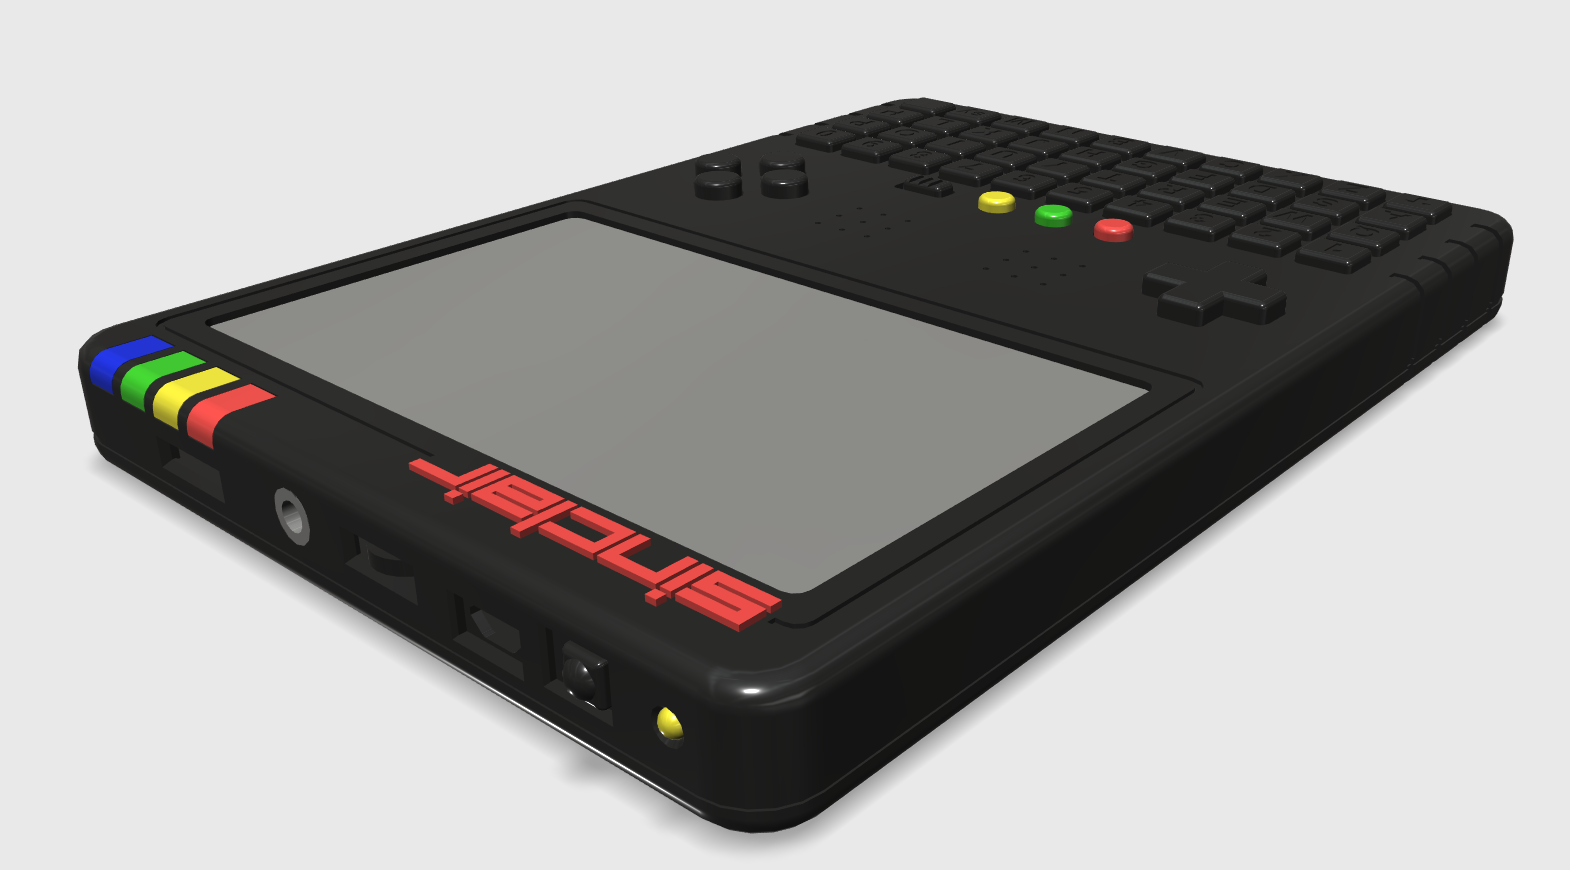 ZX Spectrum Next Handheld Design 2